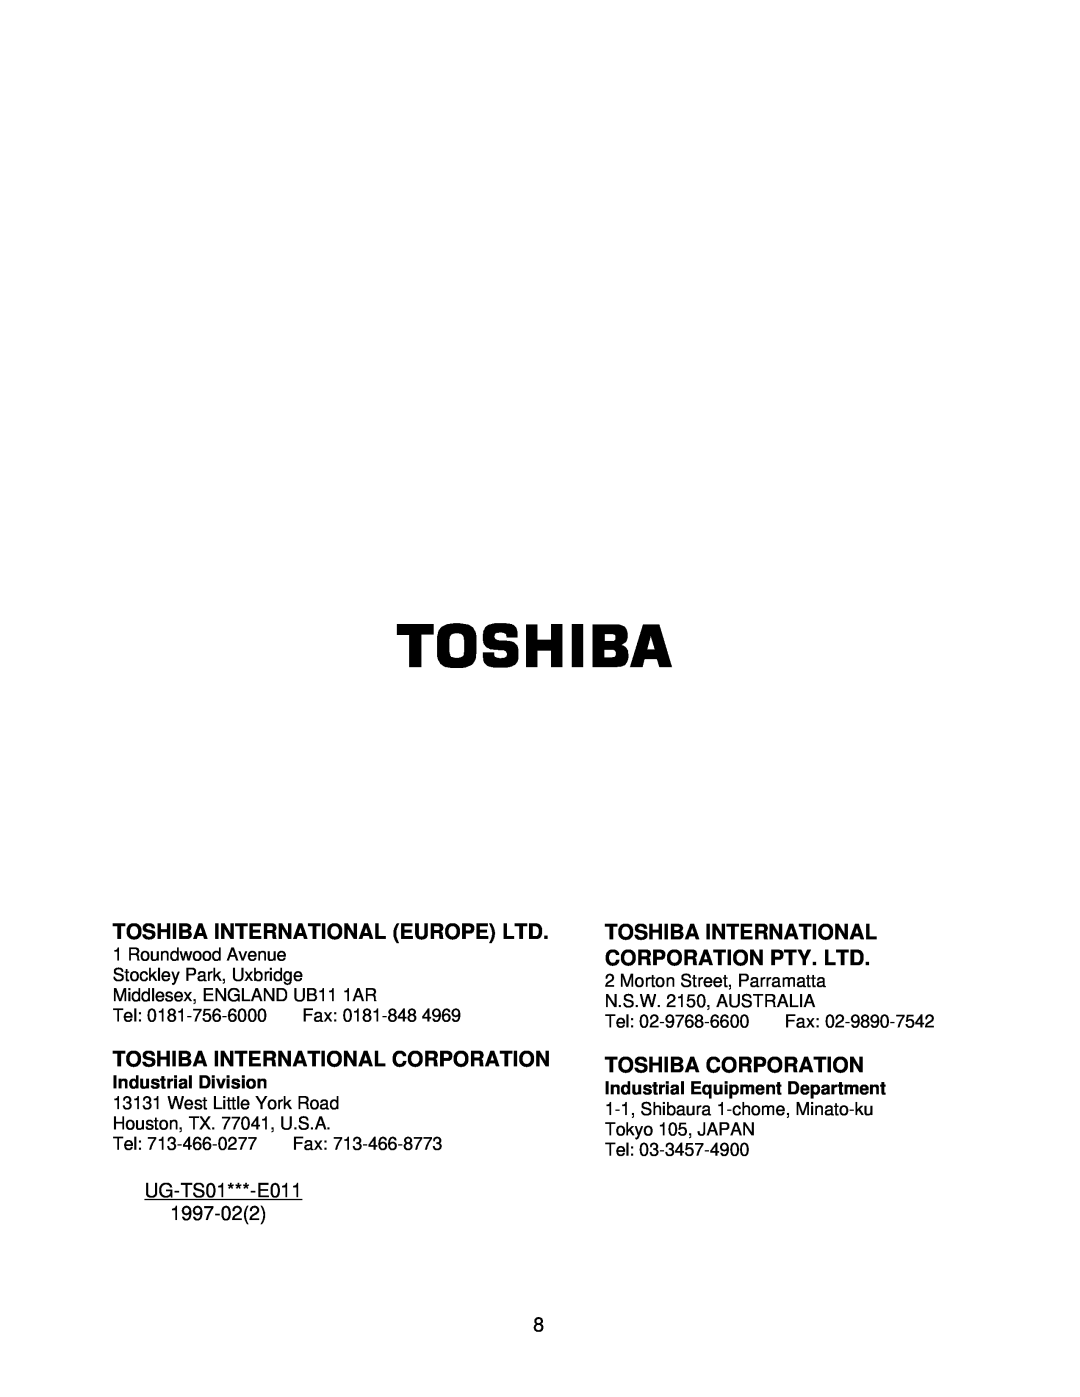 Toshiba RS232C, RS-485 Toshiba International Corporation, Toshiba Corporation, UG-TS01***-E011, Industrial Division 